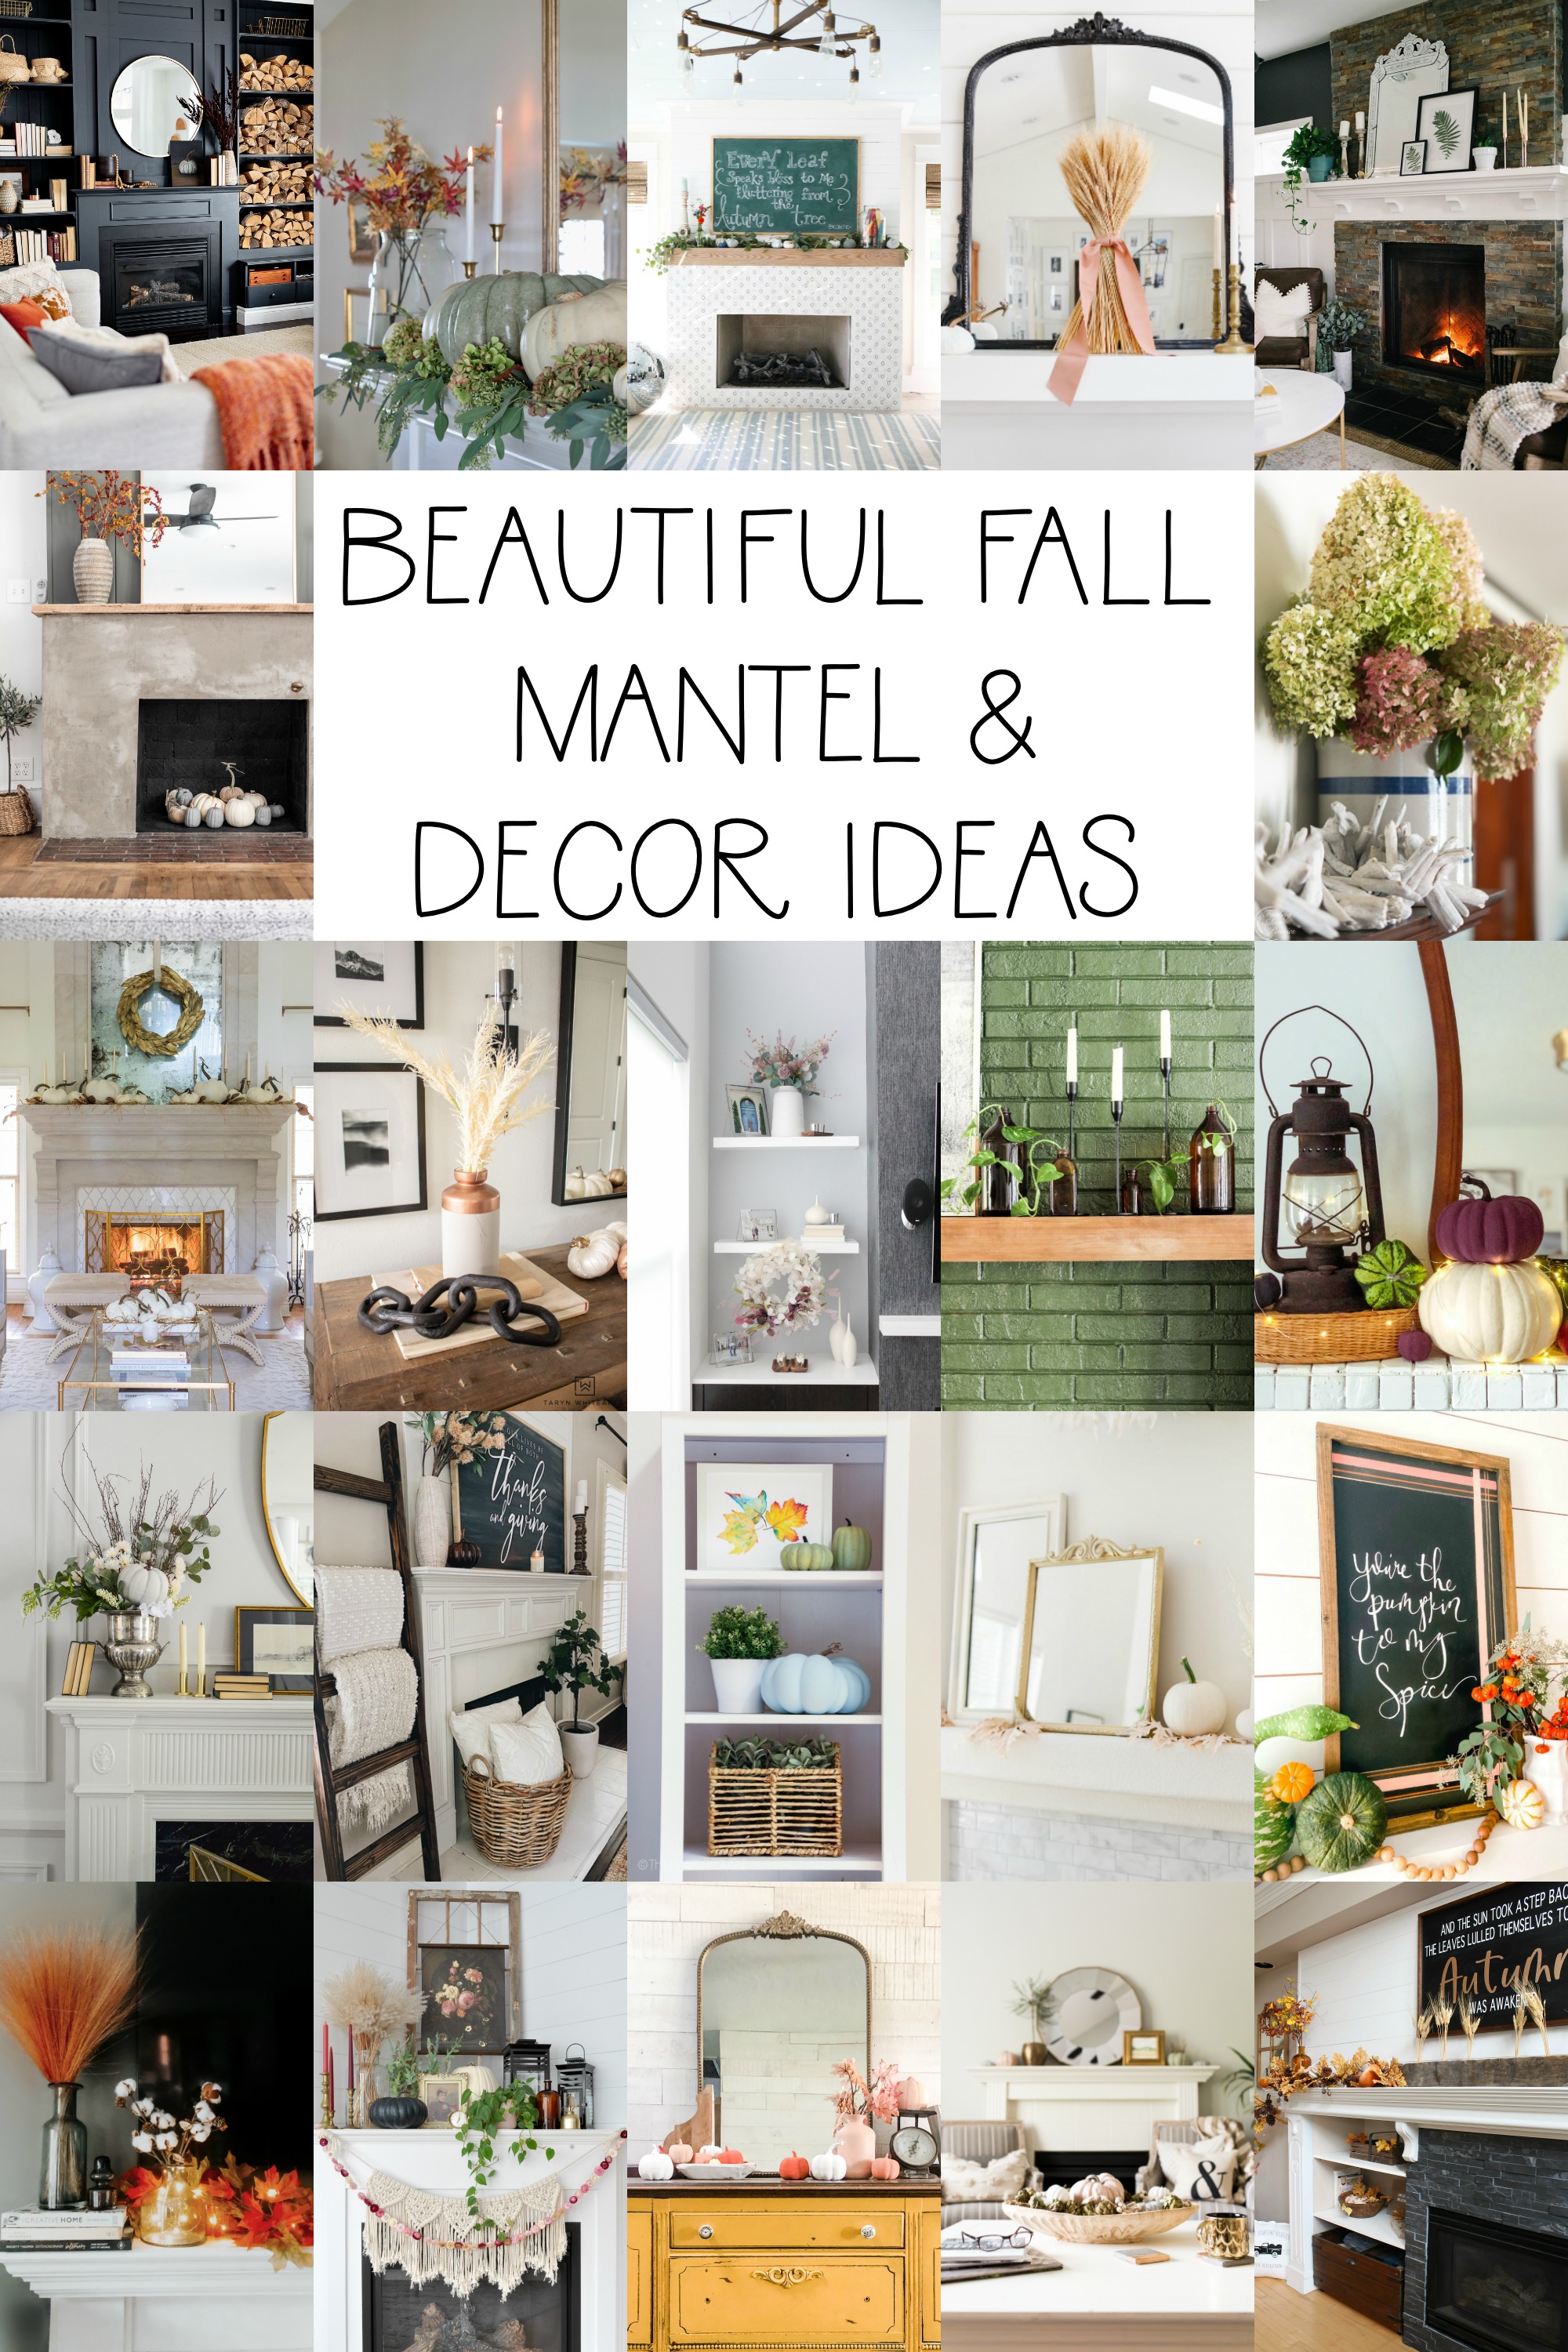 Beautiful Fall Mantel And Decor Ideas poster.